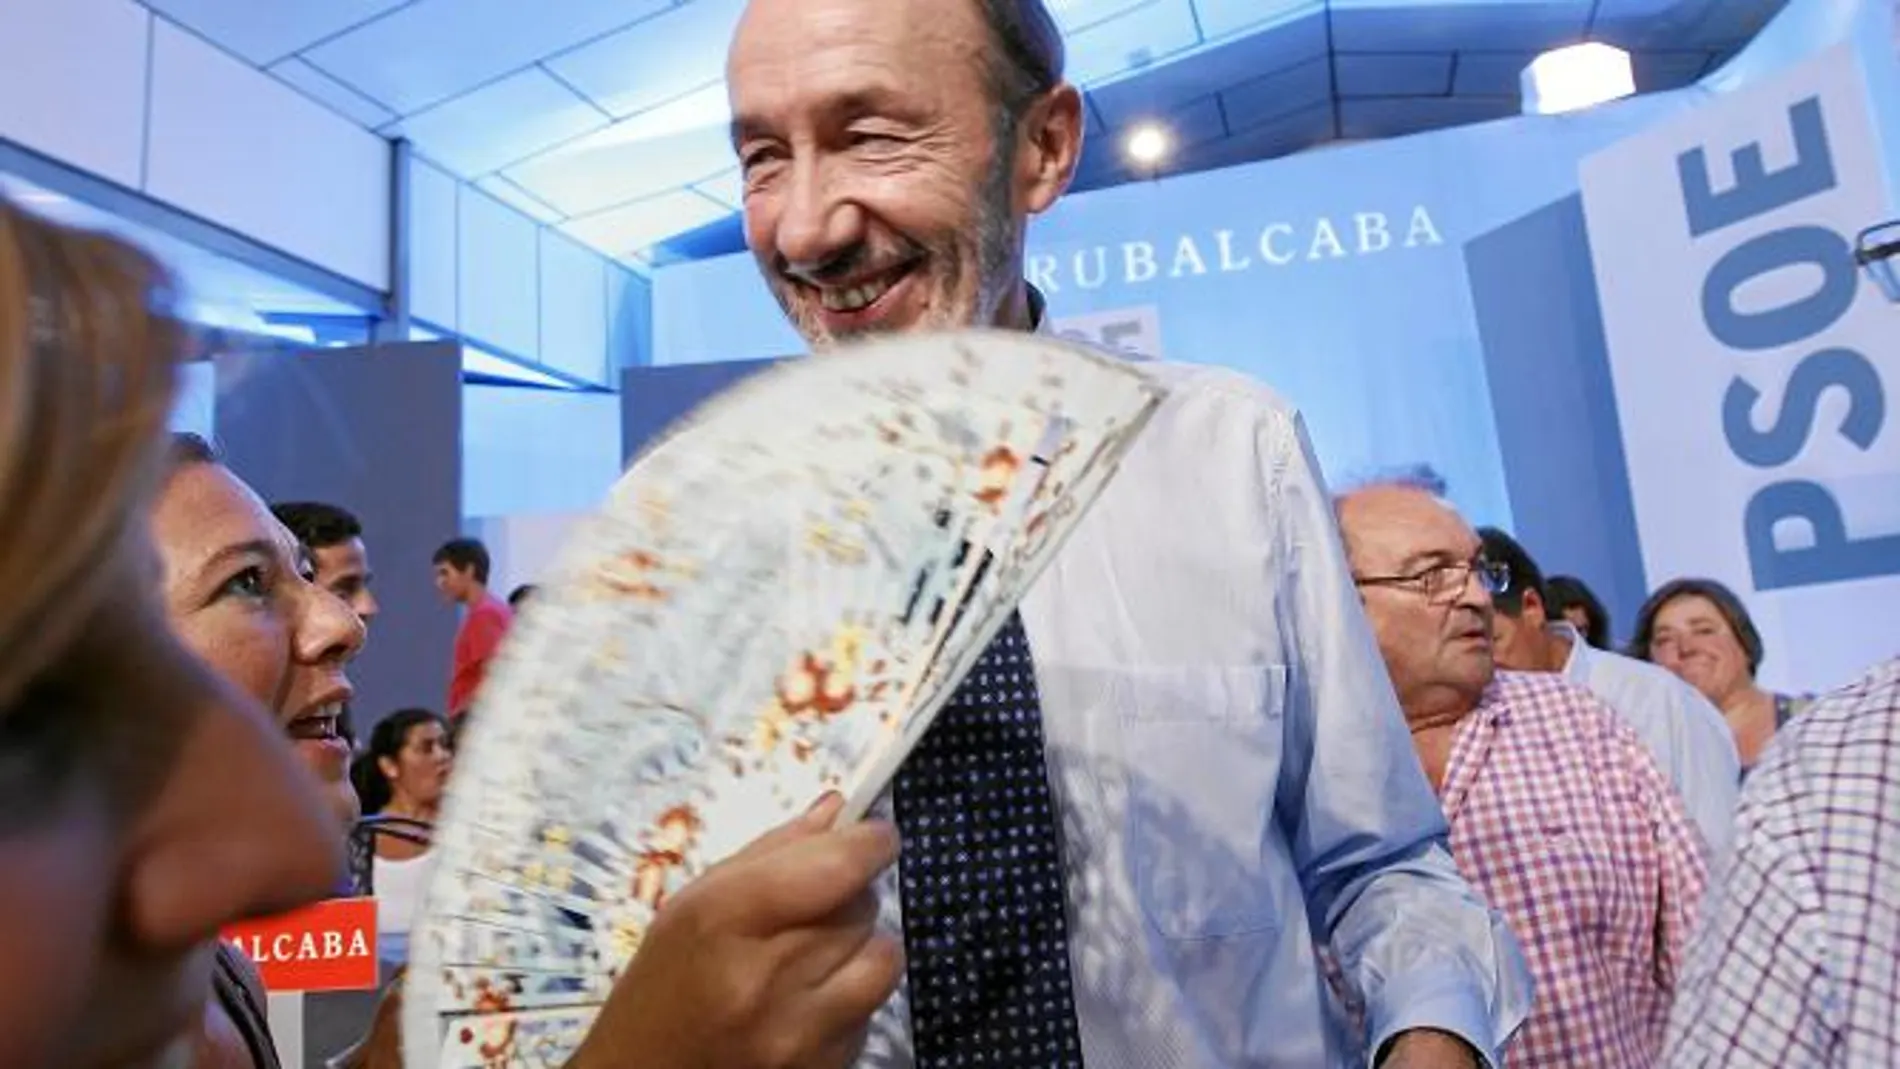 El candidato del PSOE, Alfredo Pérez Rubalcaba